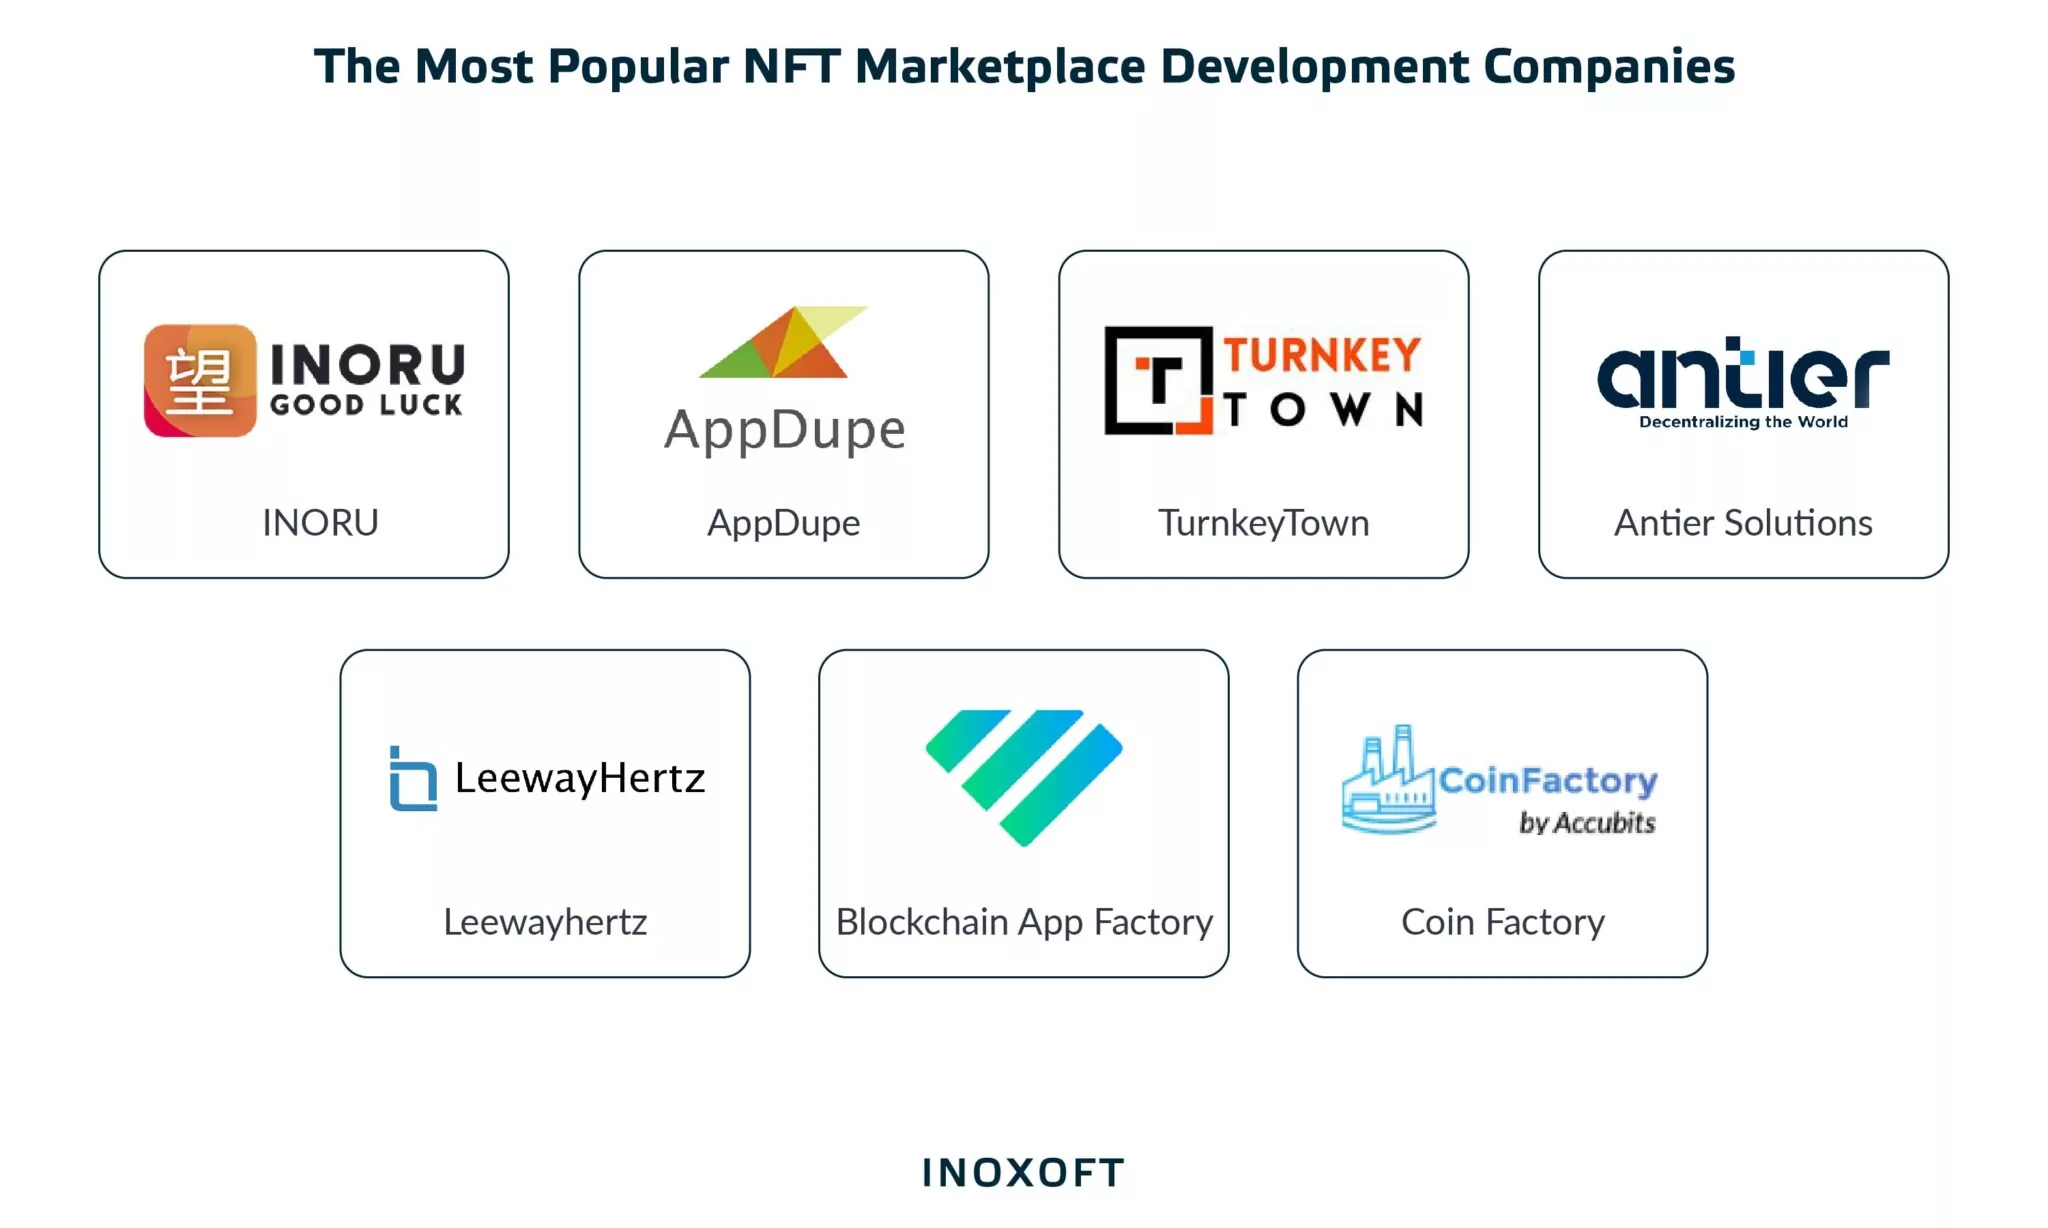 The most popular NFT marketplace development companies